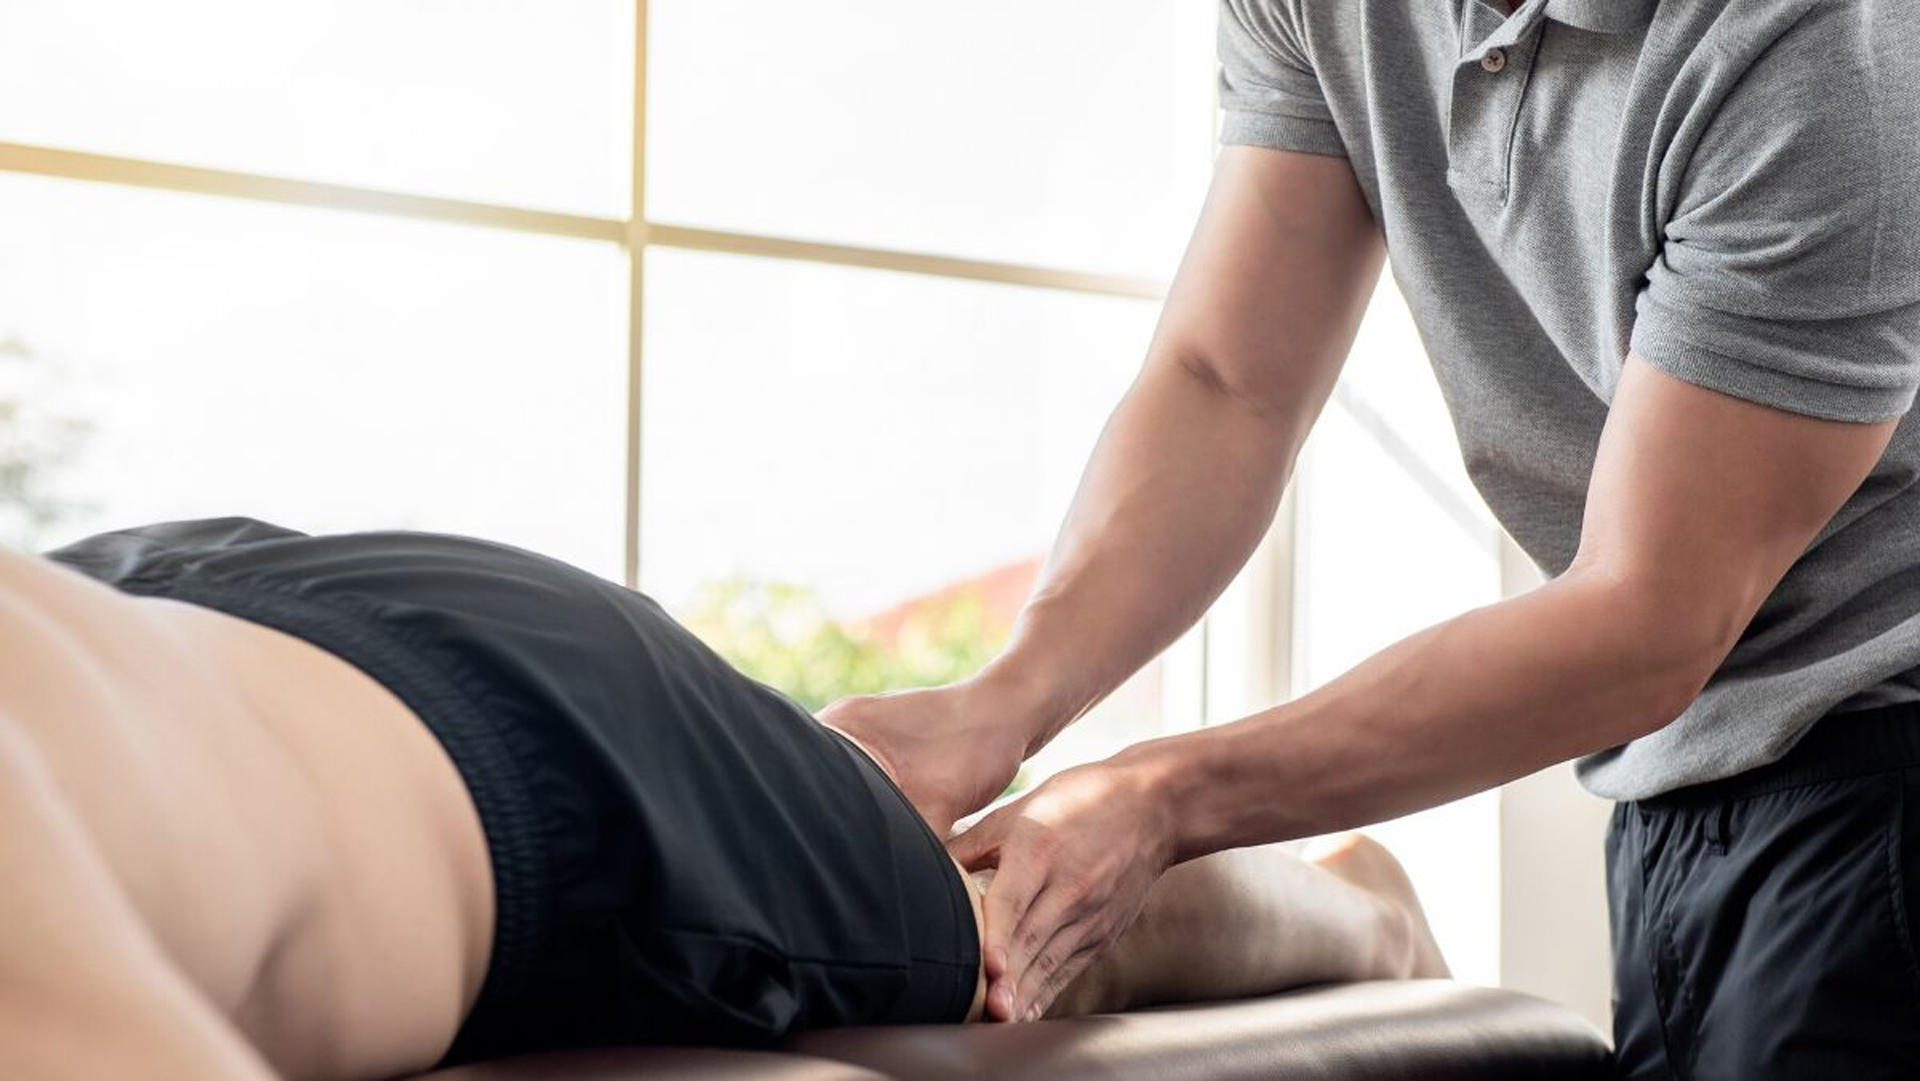 Massage therapist giving patient